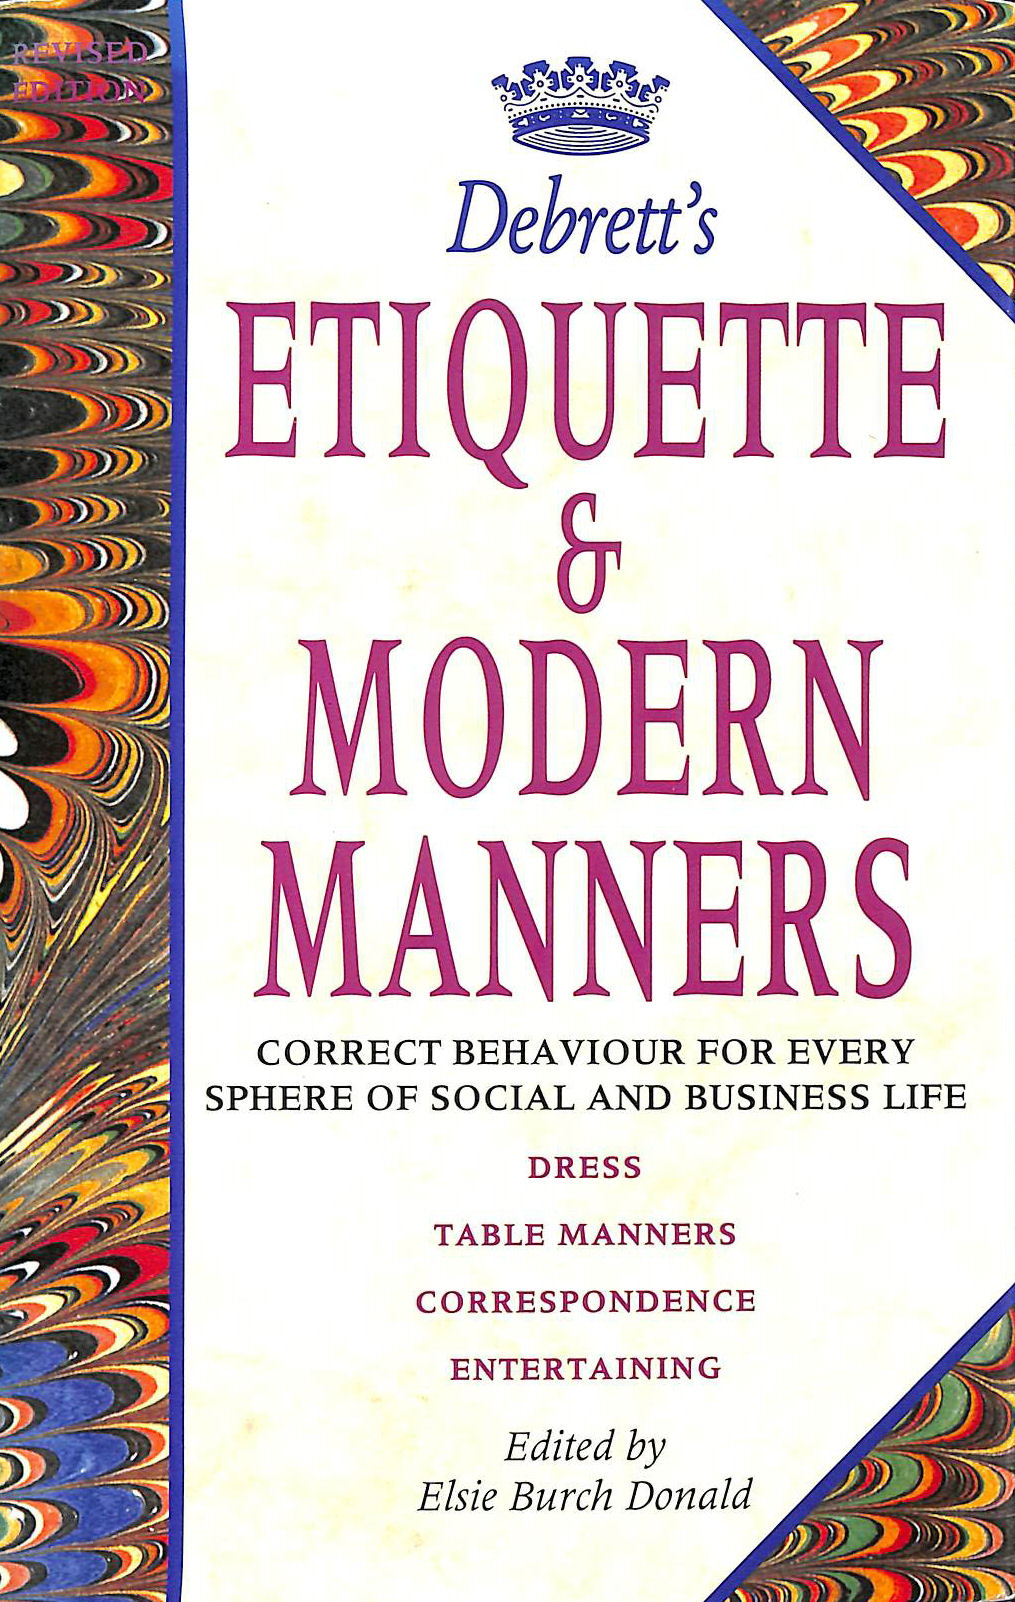 DONALD, ELSIE BURCH [EDITOR] - Debrett's Etiquette and Modern Manners